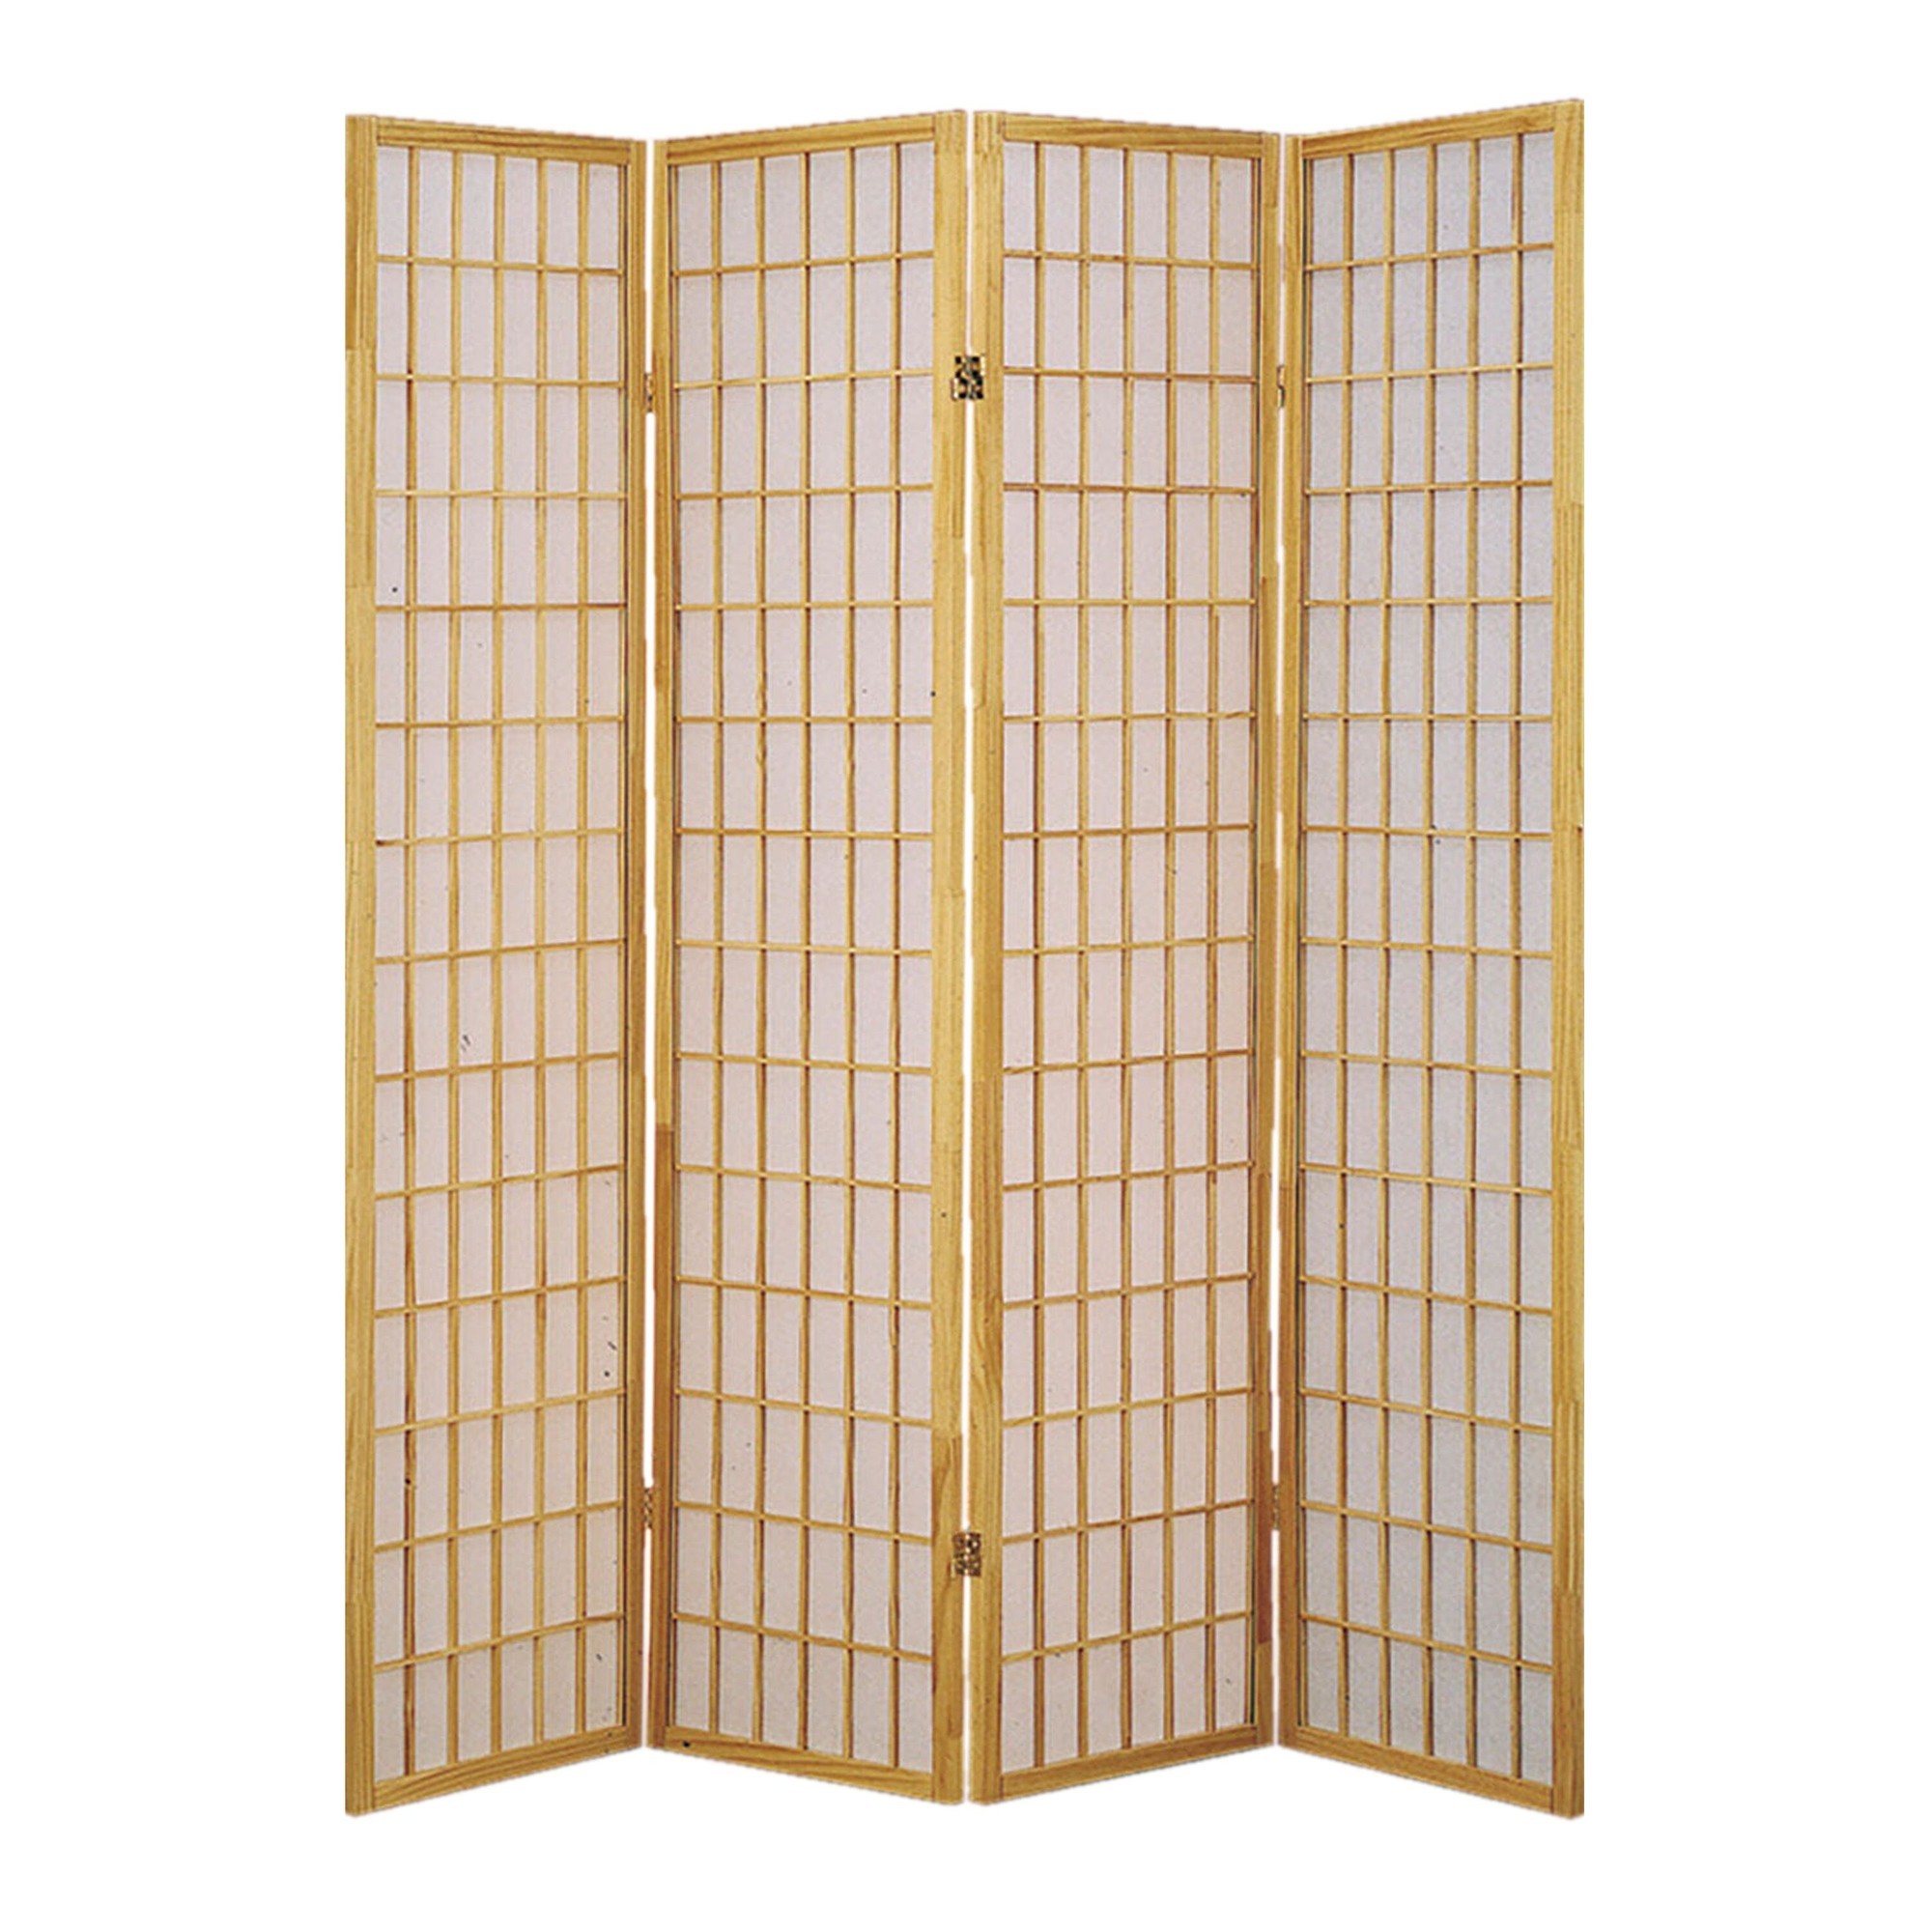 68" x 1" x 70" Natural And Brown Shoji And Wood 4 Panel Screen